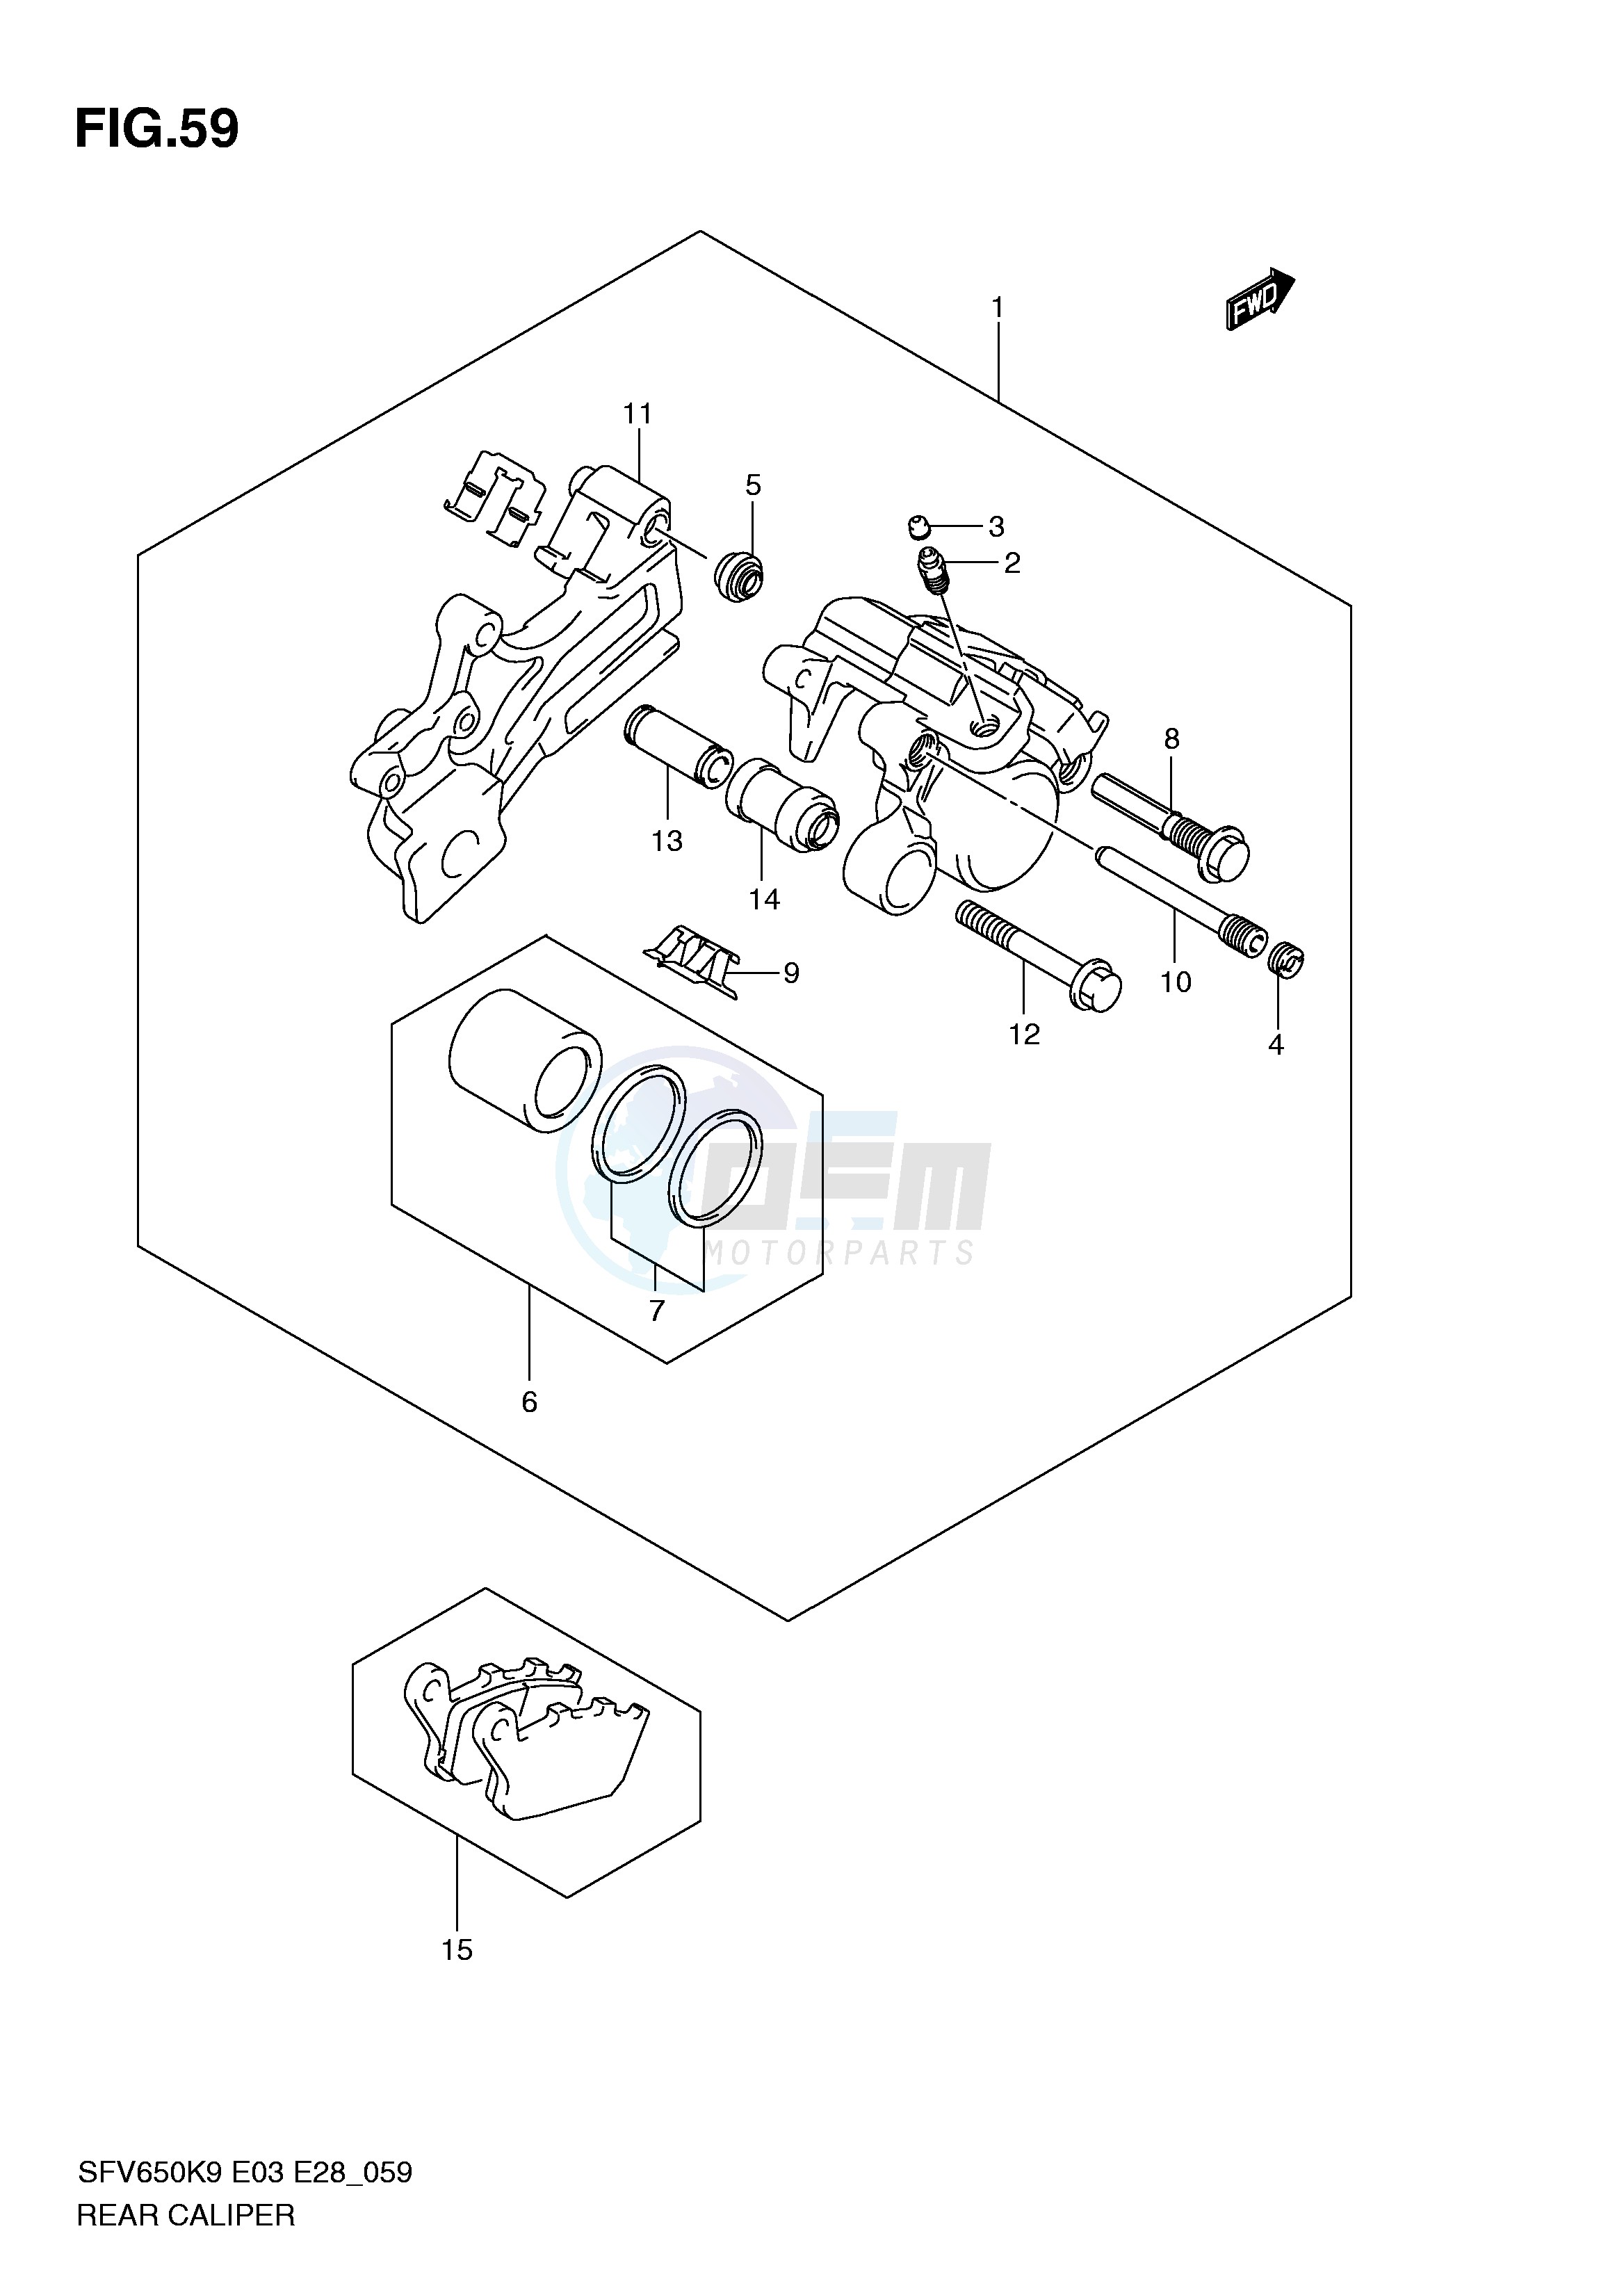 REAR CALIPER (SFV650K9 L0) blueprint